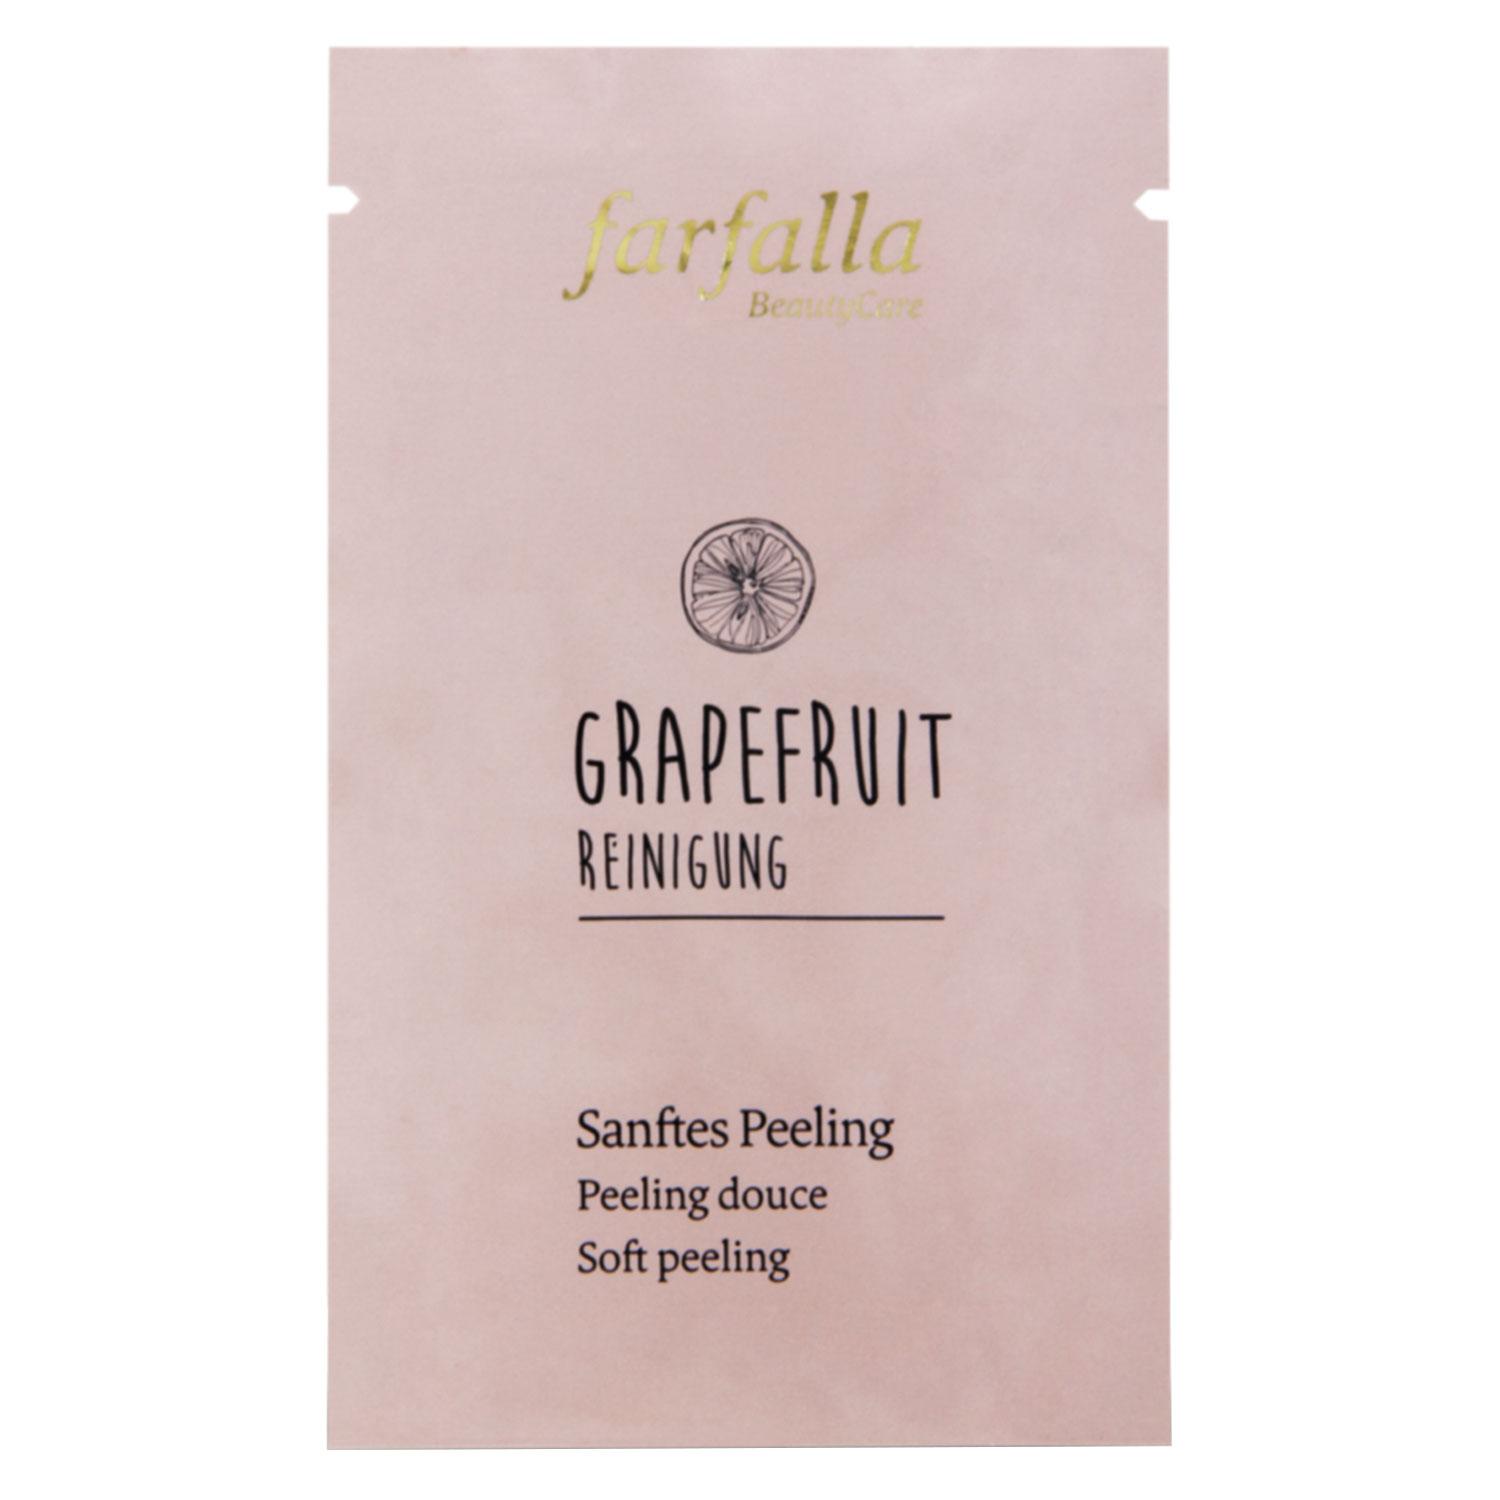 Grapefruit Reinigung - Soft peeling